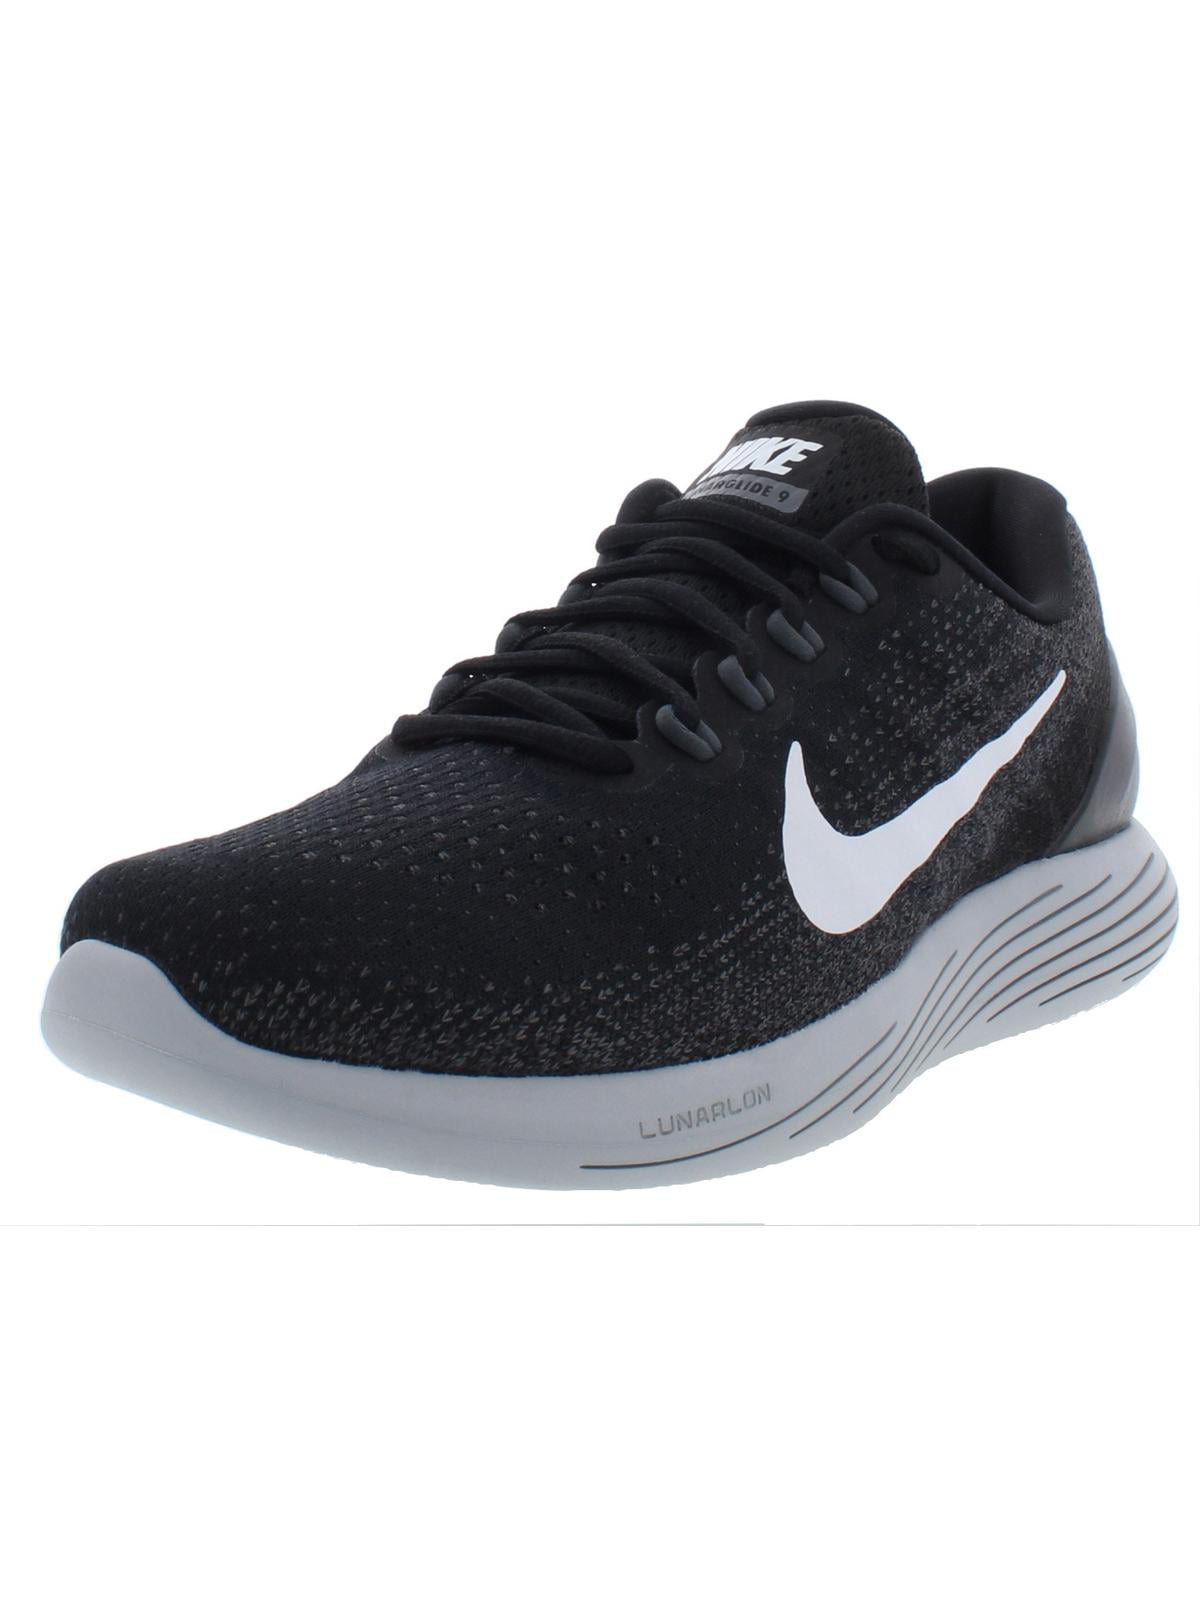 engañar borde global Nike LUNARGLIDE 9 Mens Black Athletic Running Shoes - Walmart.com